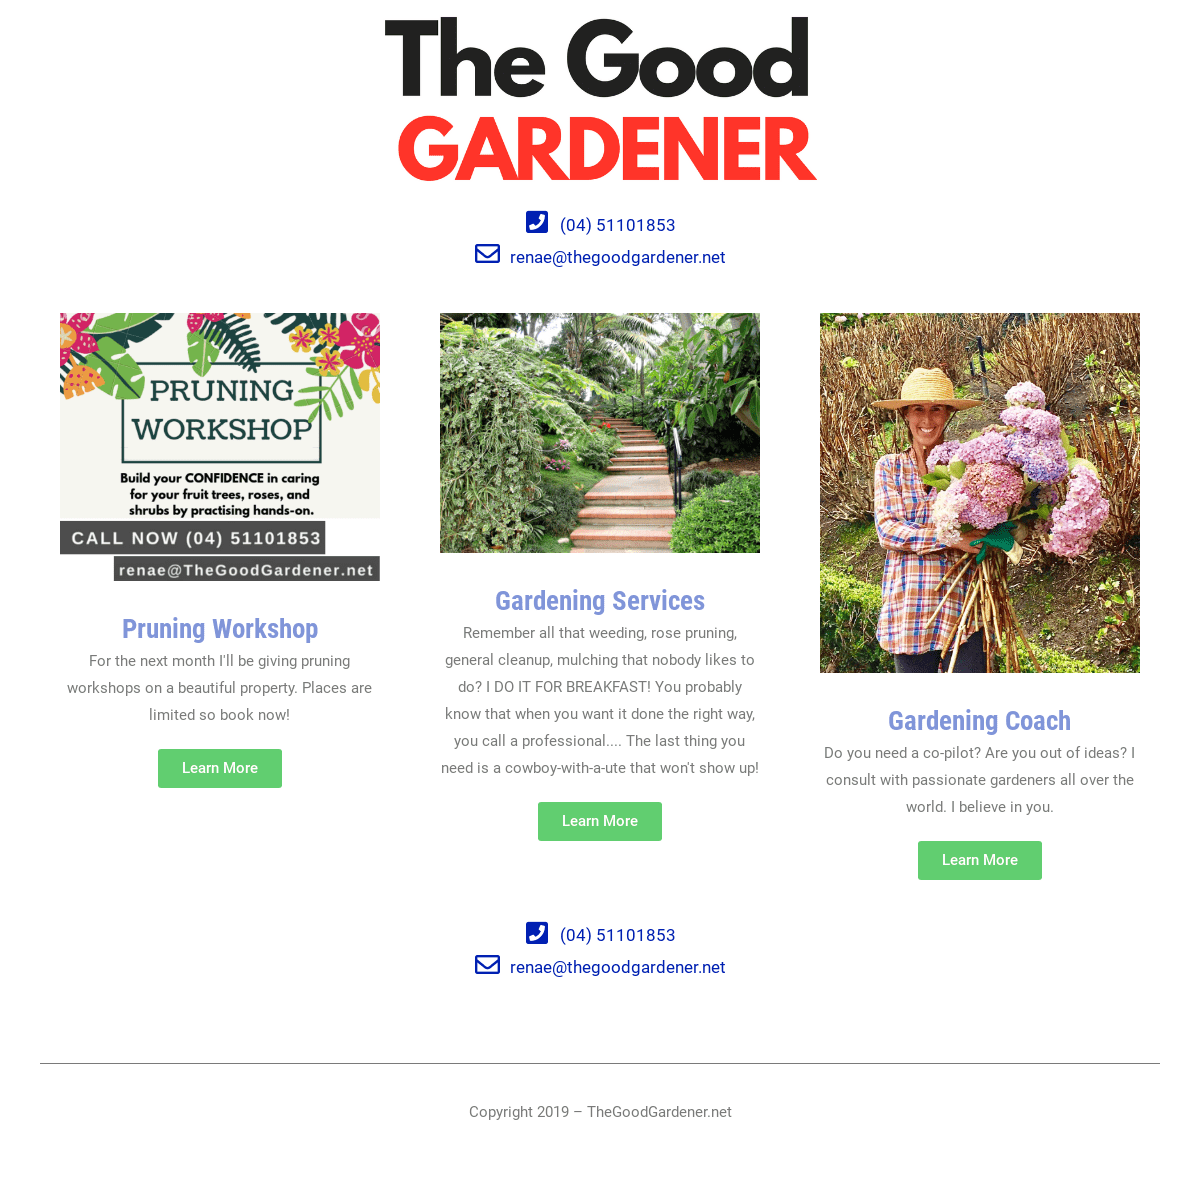 The Good Gardener – High Quality Gardening Services